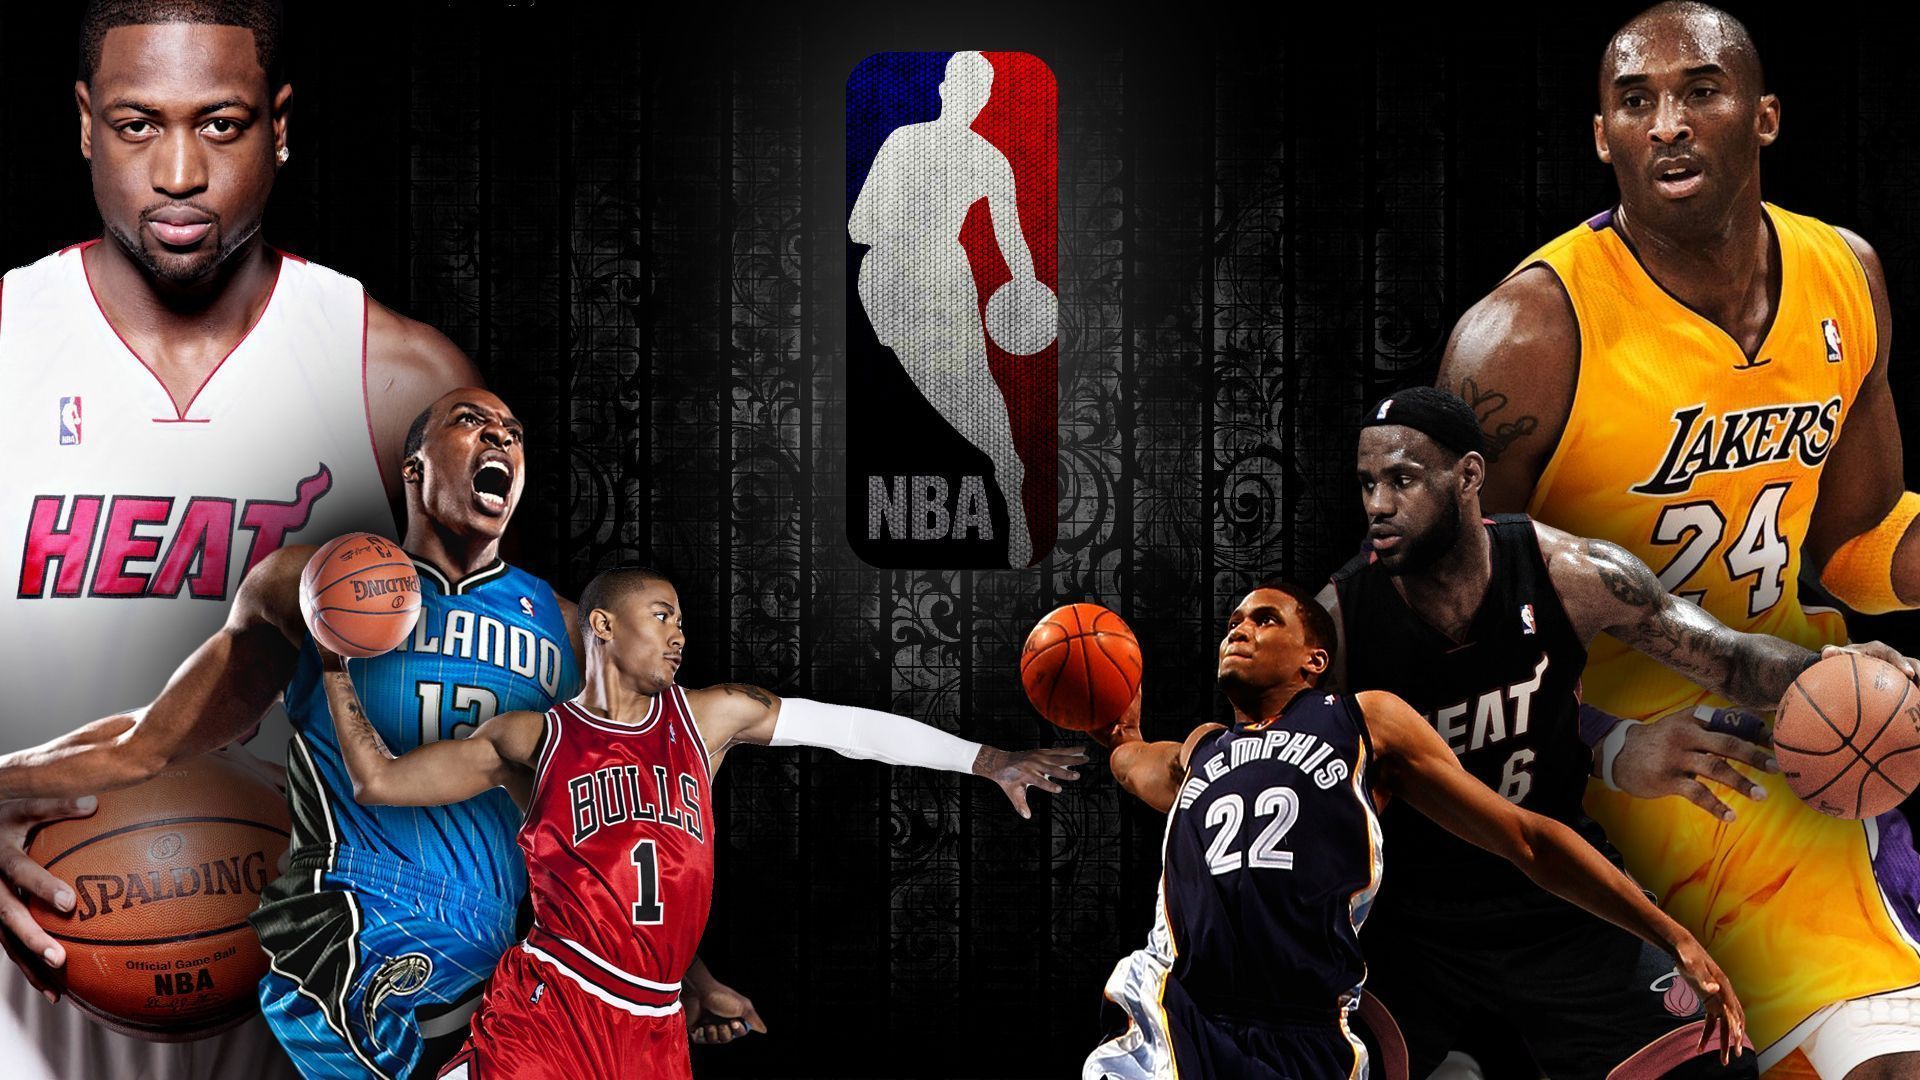 NBA HD Wallpapers Group (80+)